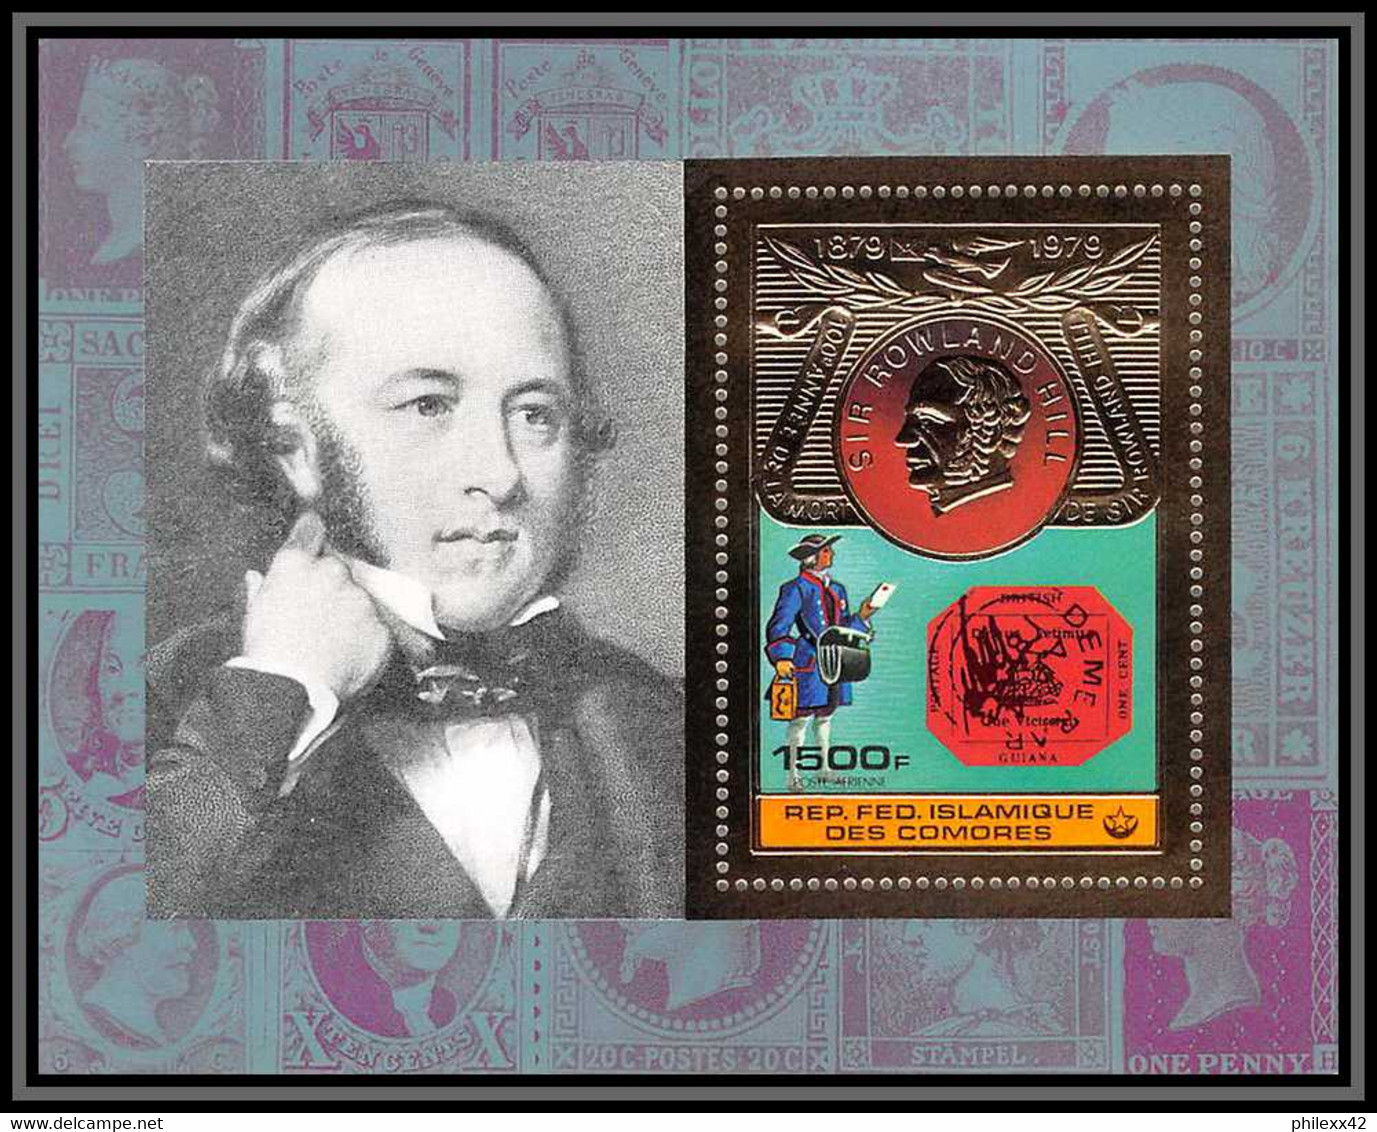 85736a Bloc Bf N°198 A Rowland Hill 1978 Penny Black Comores Comoros Timbres OR Gold Stamps UPU ** MNH - Comores (1975-...)